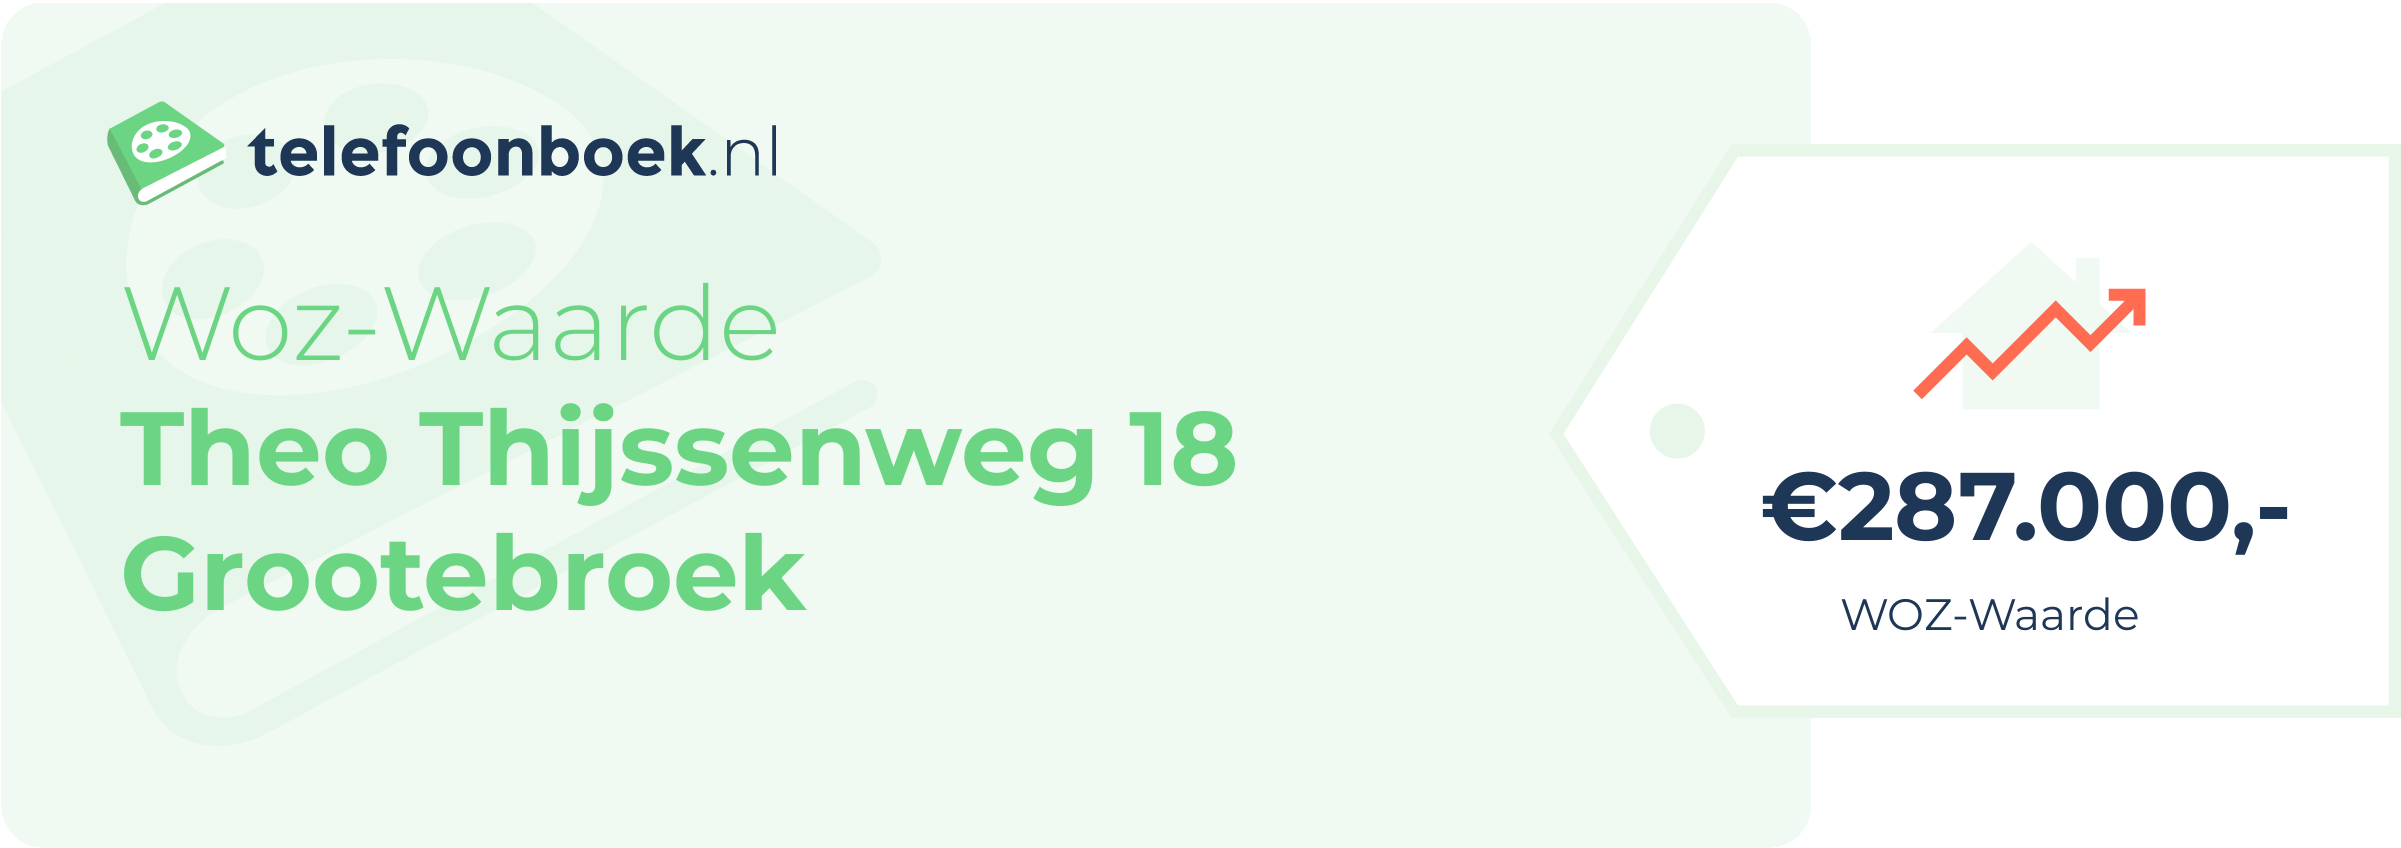 WOZ-waarde Theo Thijssenweg 18 Grootebroek